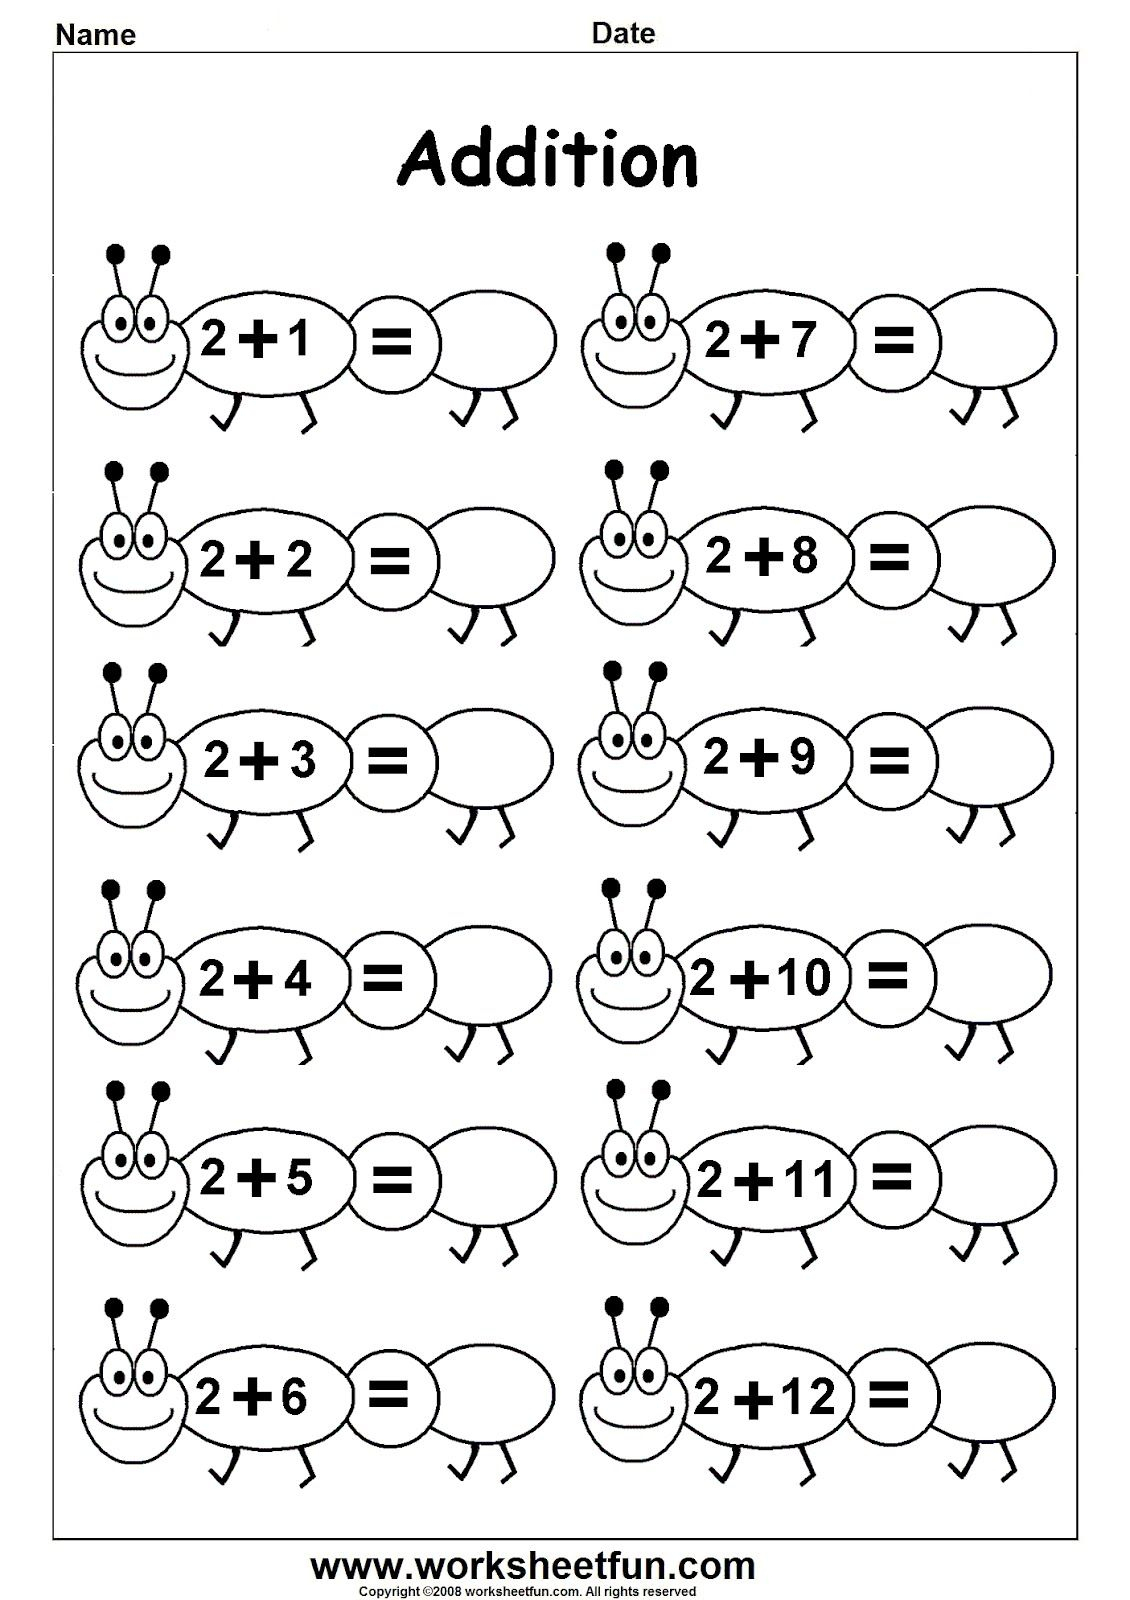 Worksheetfun - Free Printable Worksheets | Eva | Pinterest - Free Printable Sheets For Kindergarten